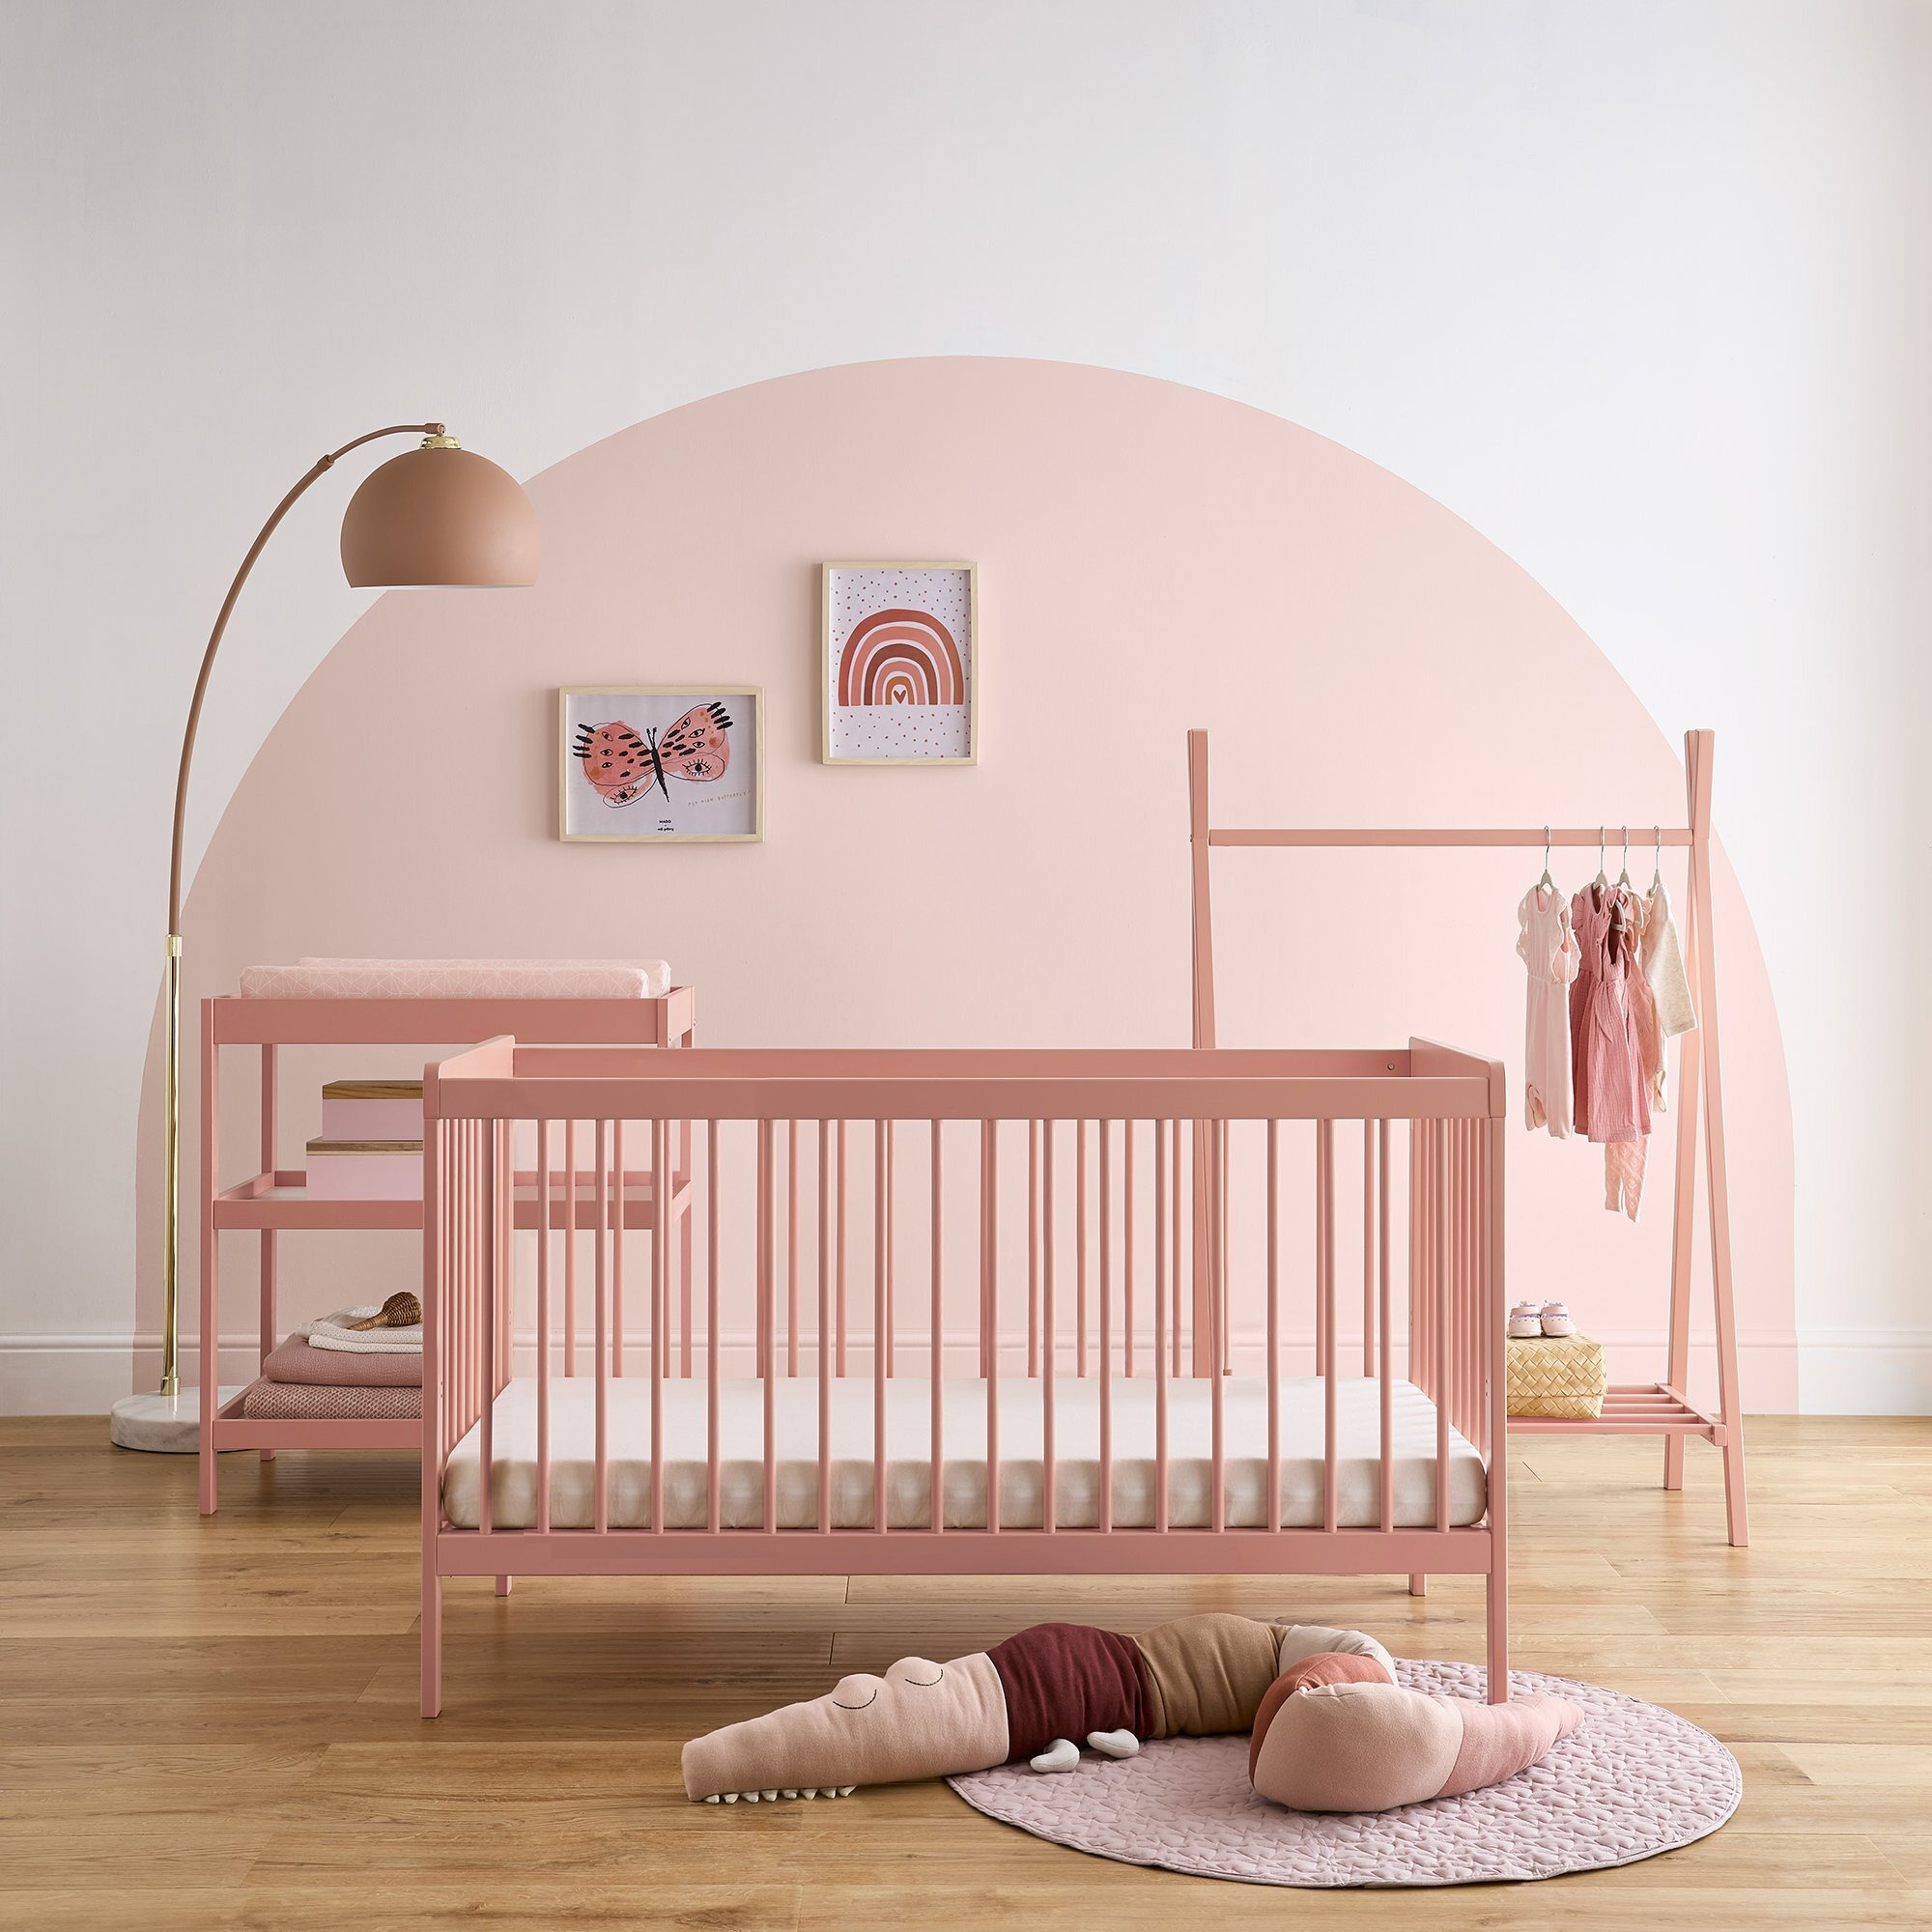 Cuddleco Nola 3 Piece Nursery Furniture Set - Pink - image 1